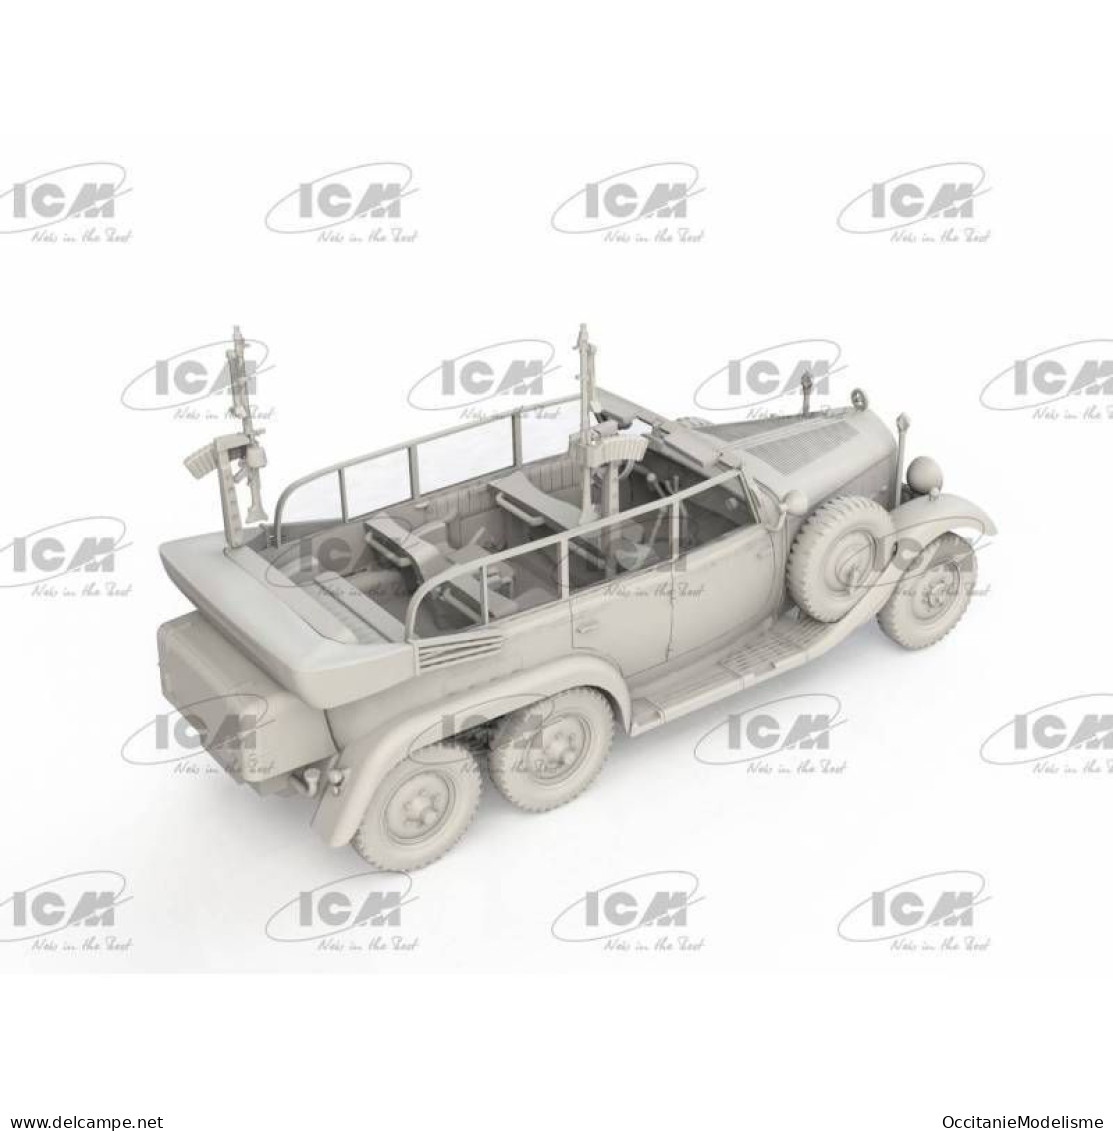 ICM - MERCEDES-BENZ TYPE G4 Partisanenwagen MG34 WWII Maquette Kit Plastique Réf. 72473 Neuf NBO 1/72 - Vehículos Militares